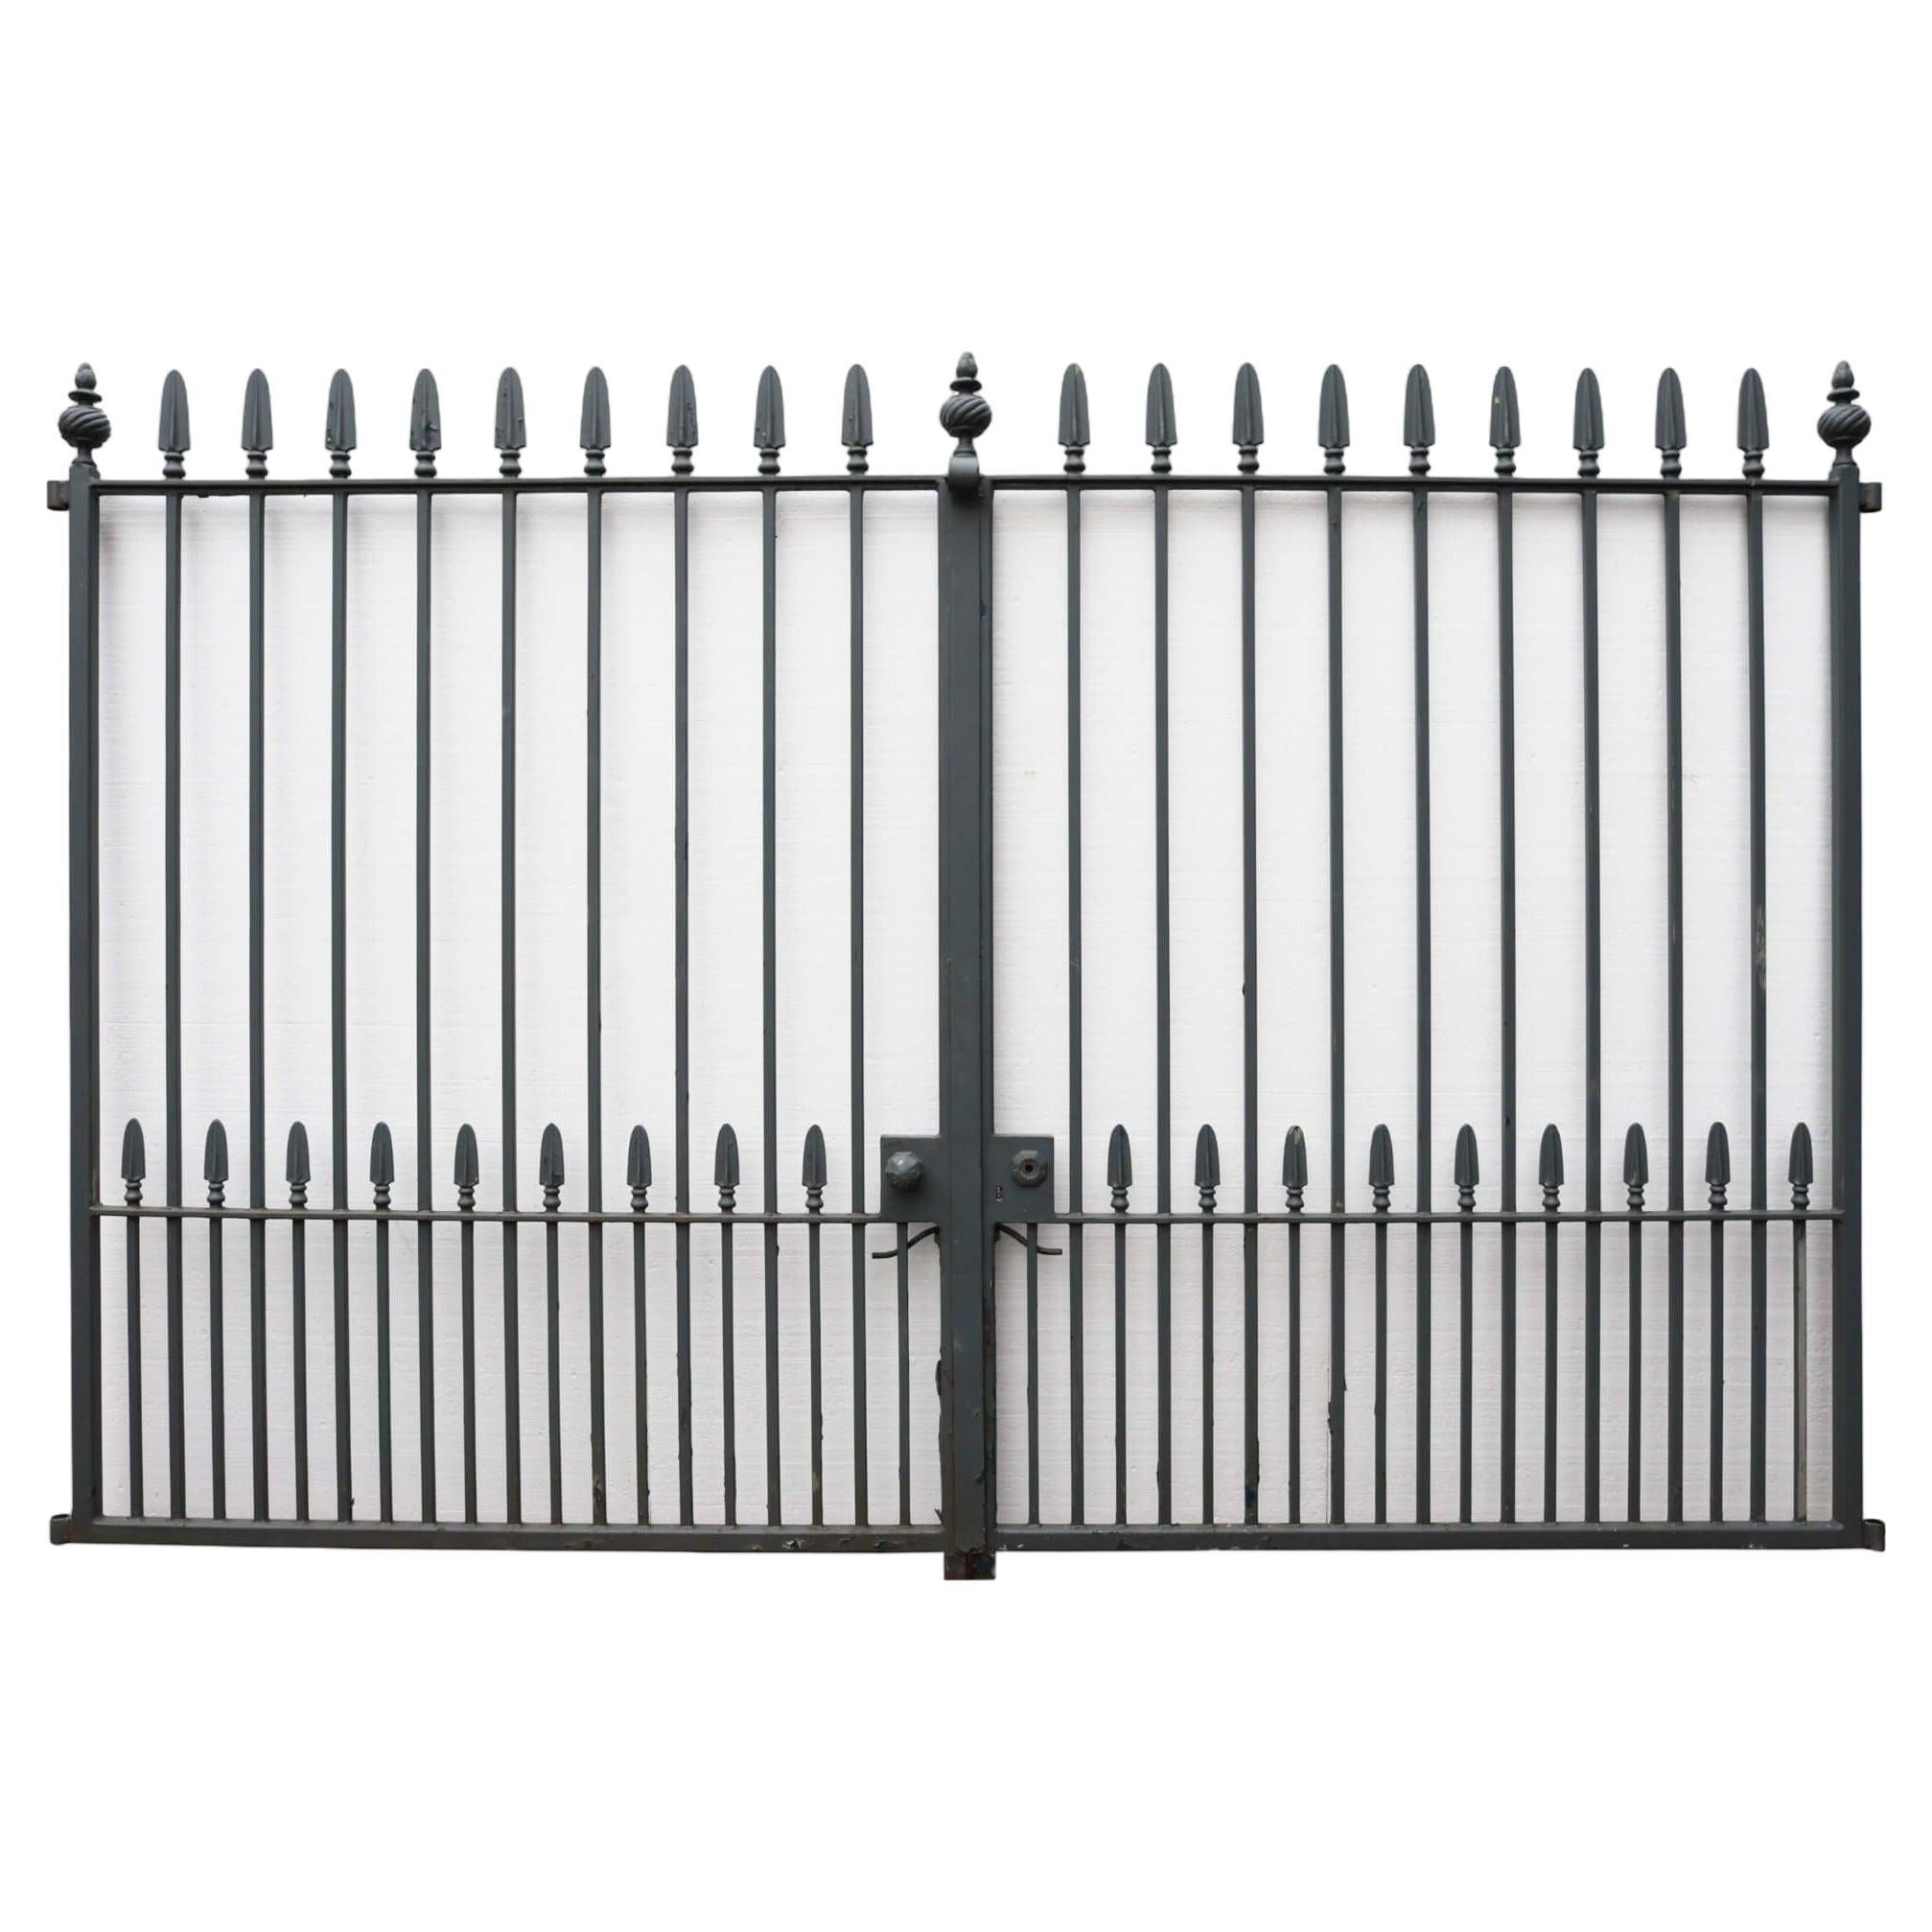 Set of Reclaimed Steel Driveway Gates 313 cm (10’3”)